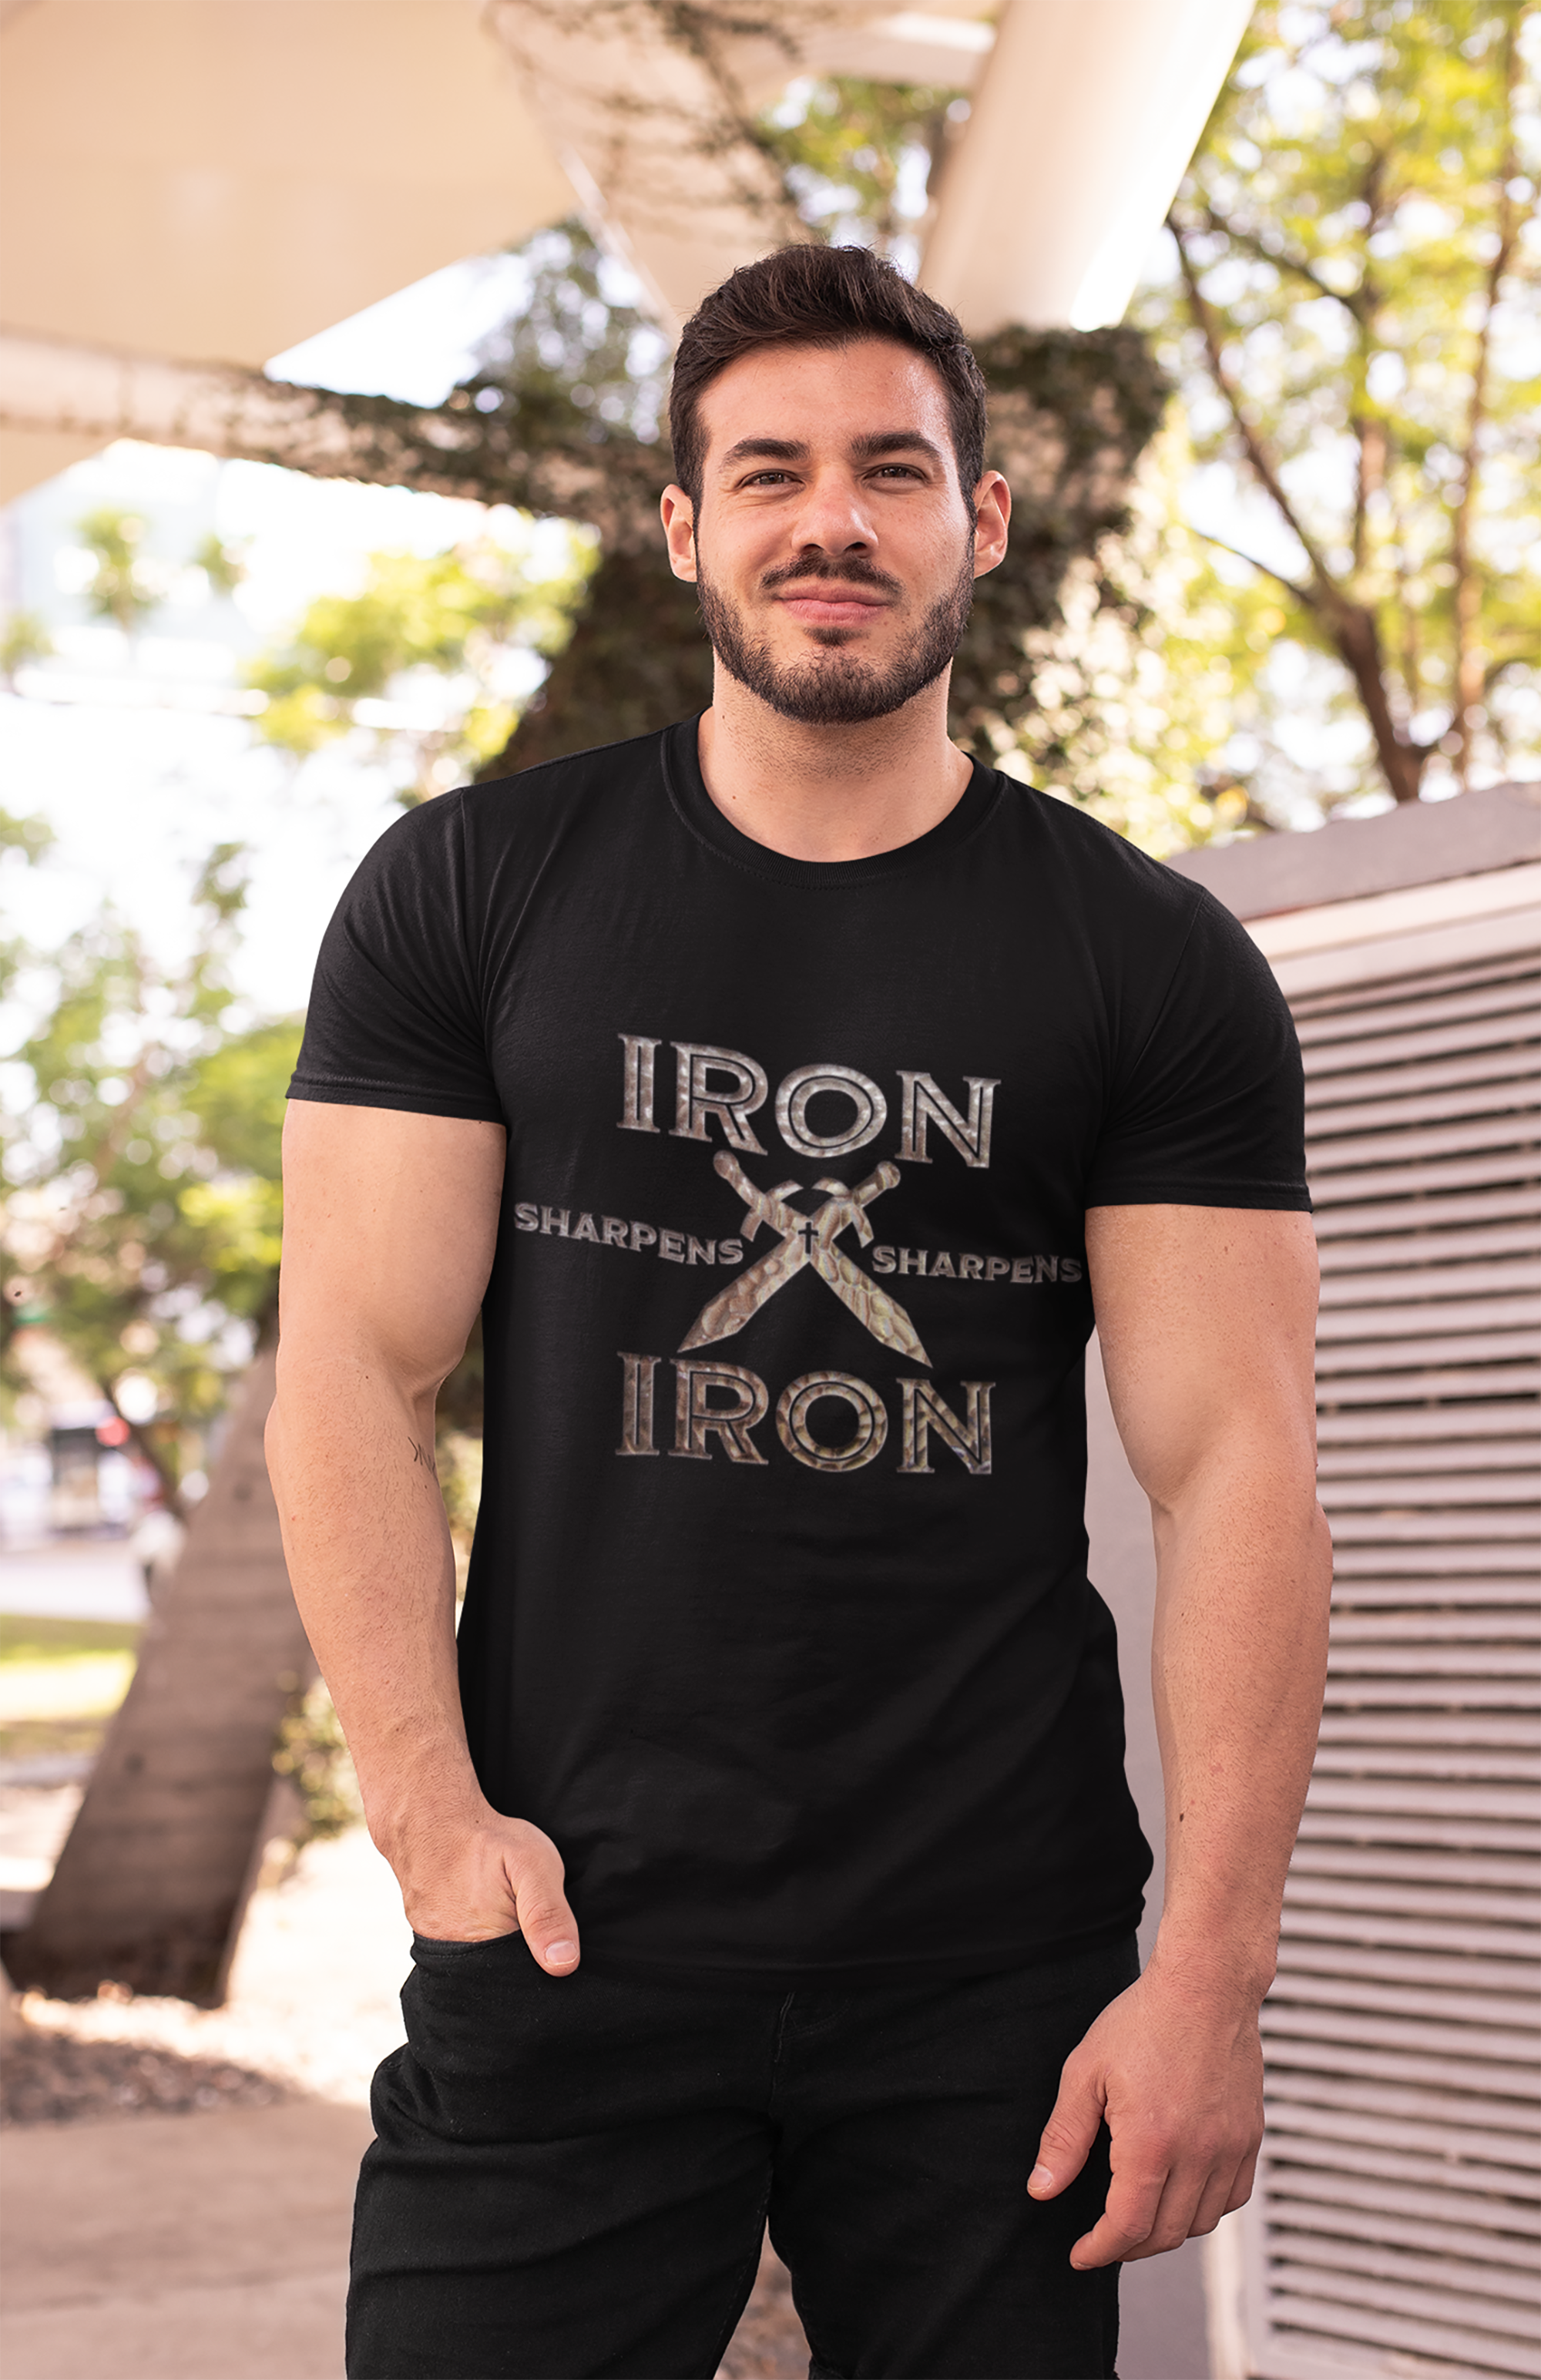 Iron Sharpens Iron Inspirational T-shirt